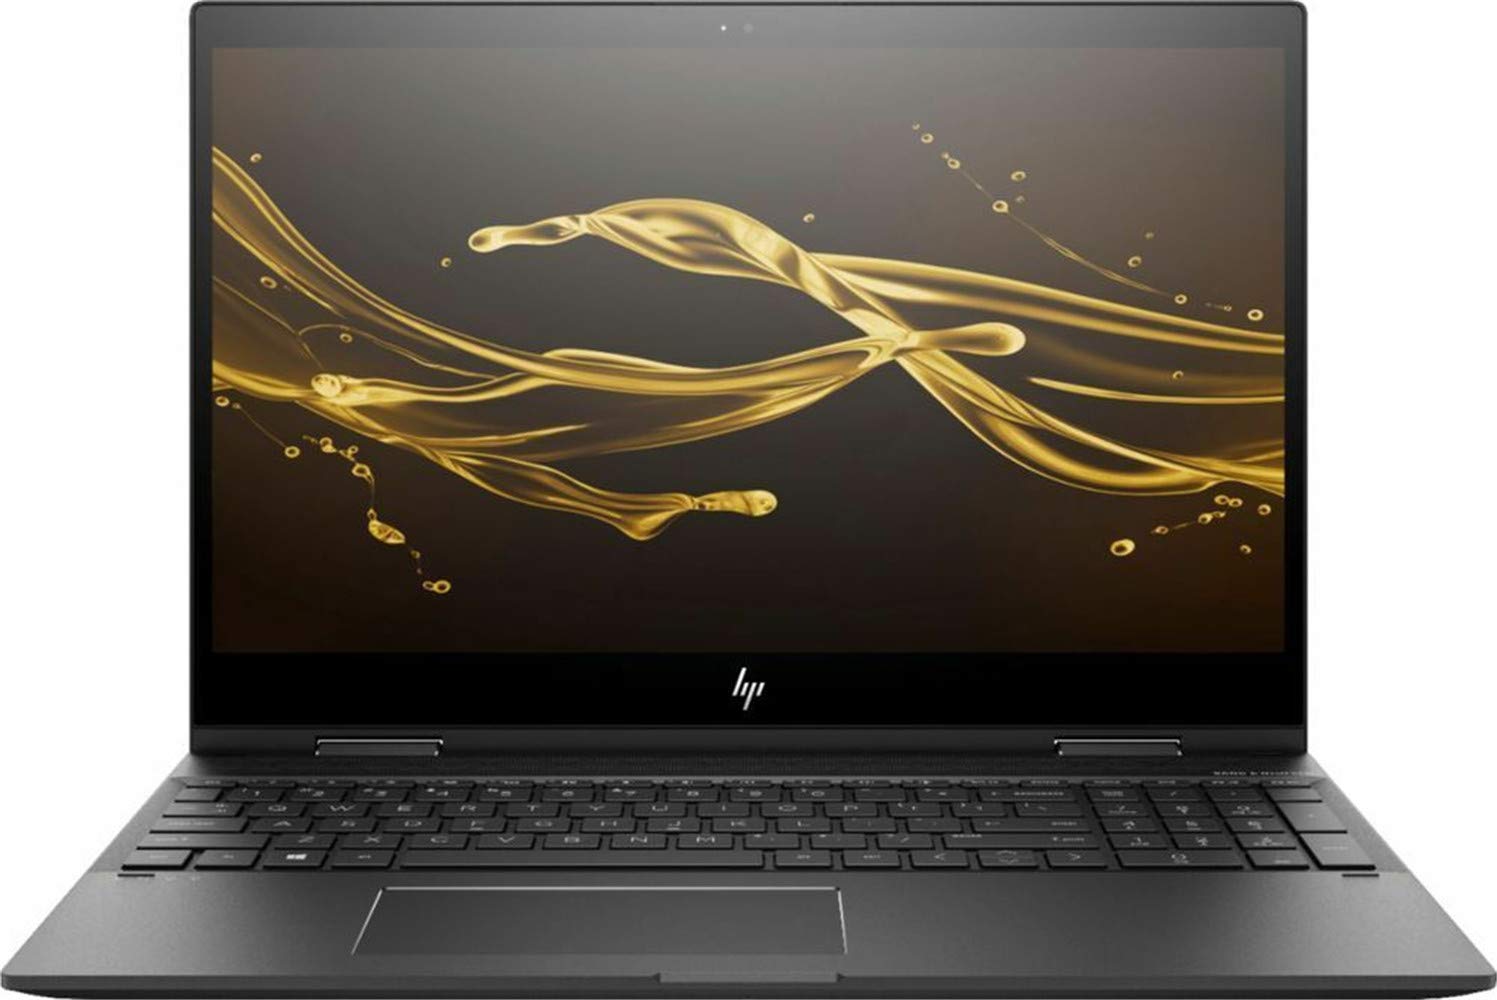 HP 2019 Envy x360 15.6" FHD Touchscreen 2-in-1 Laptop Computer, AMD Ryzen 5 2500U Quad-Core up to 3.6Ghz(Beat I7-7500U), 8GB DDR4, 256GB SSD, 802.11AC WiFi, Bluetooth 4.2, USB-C 3.1, HDMI, Windows 10